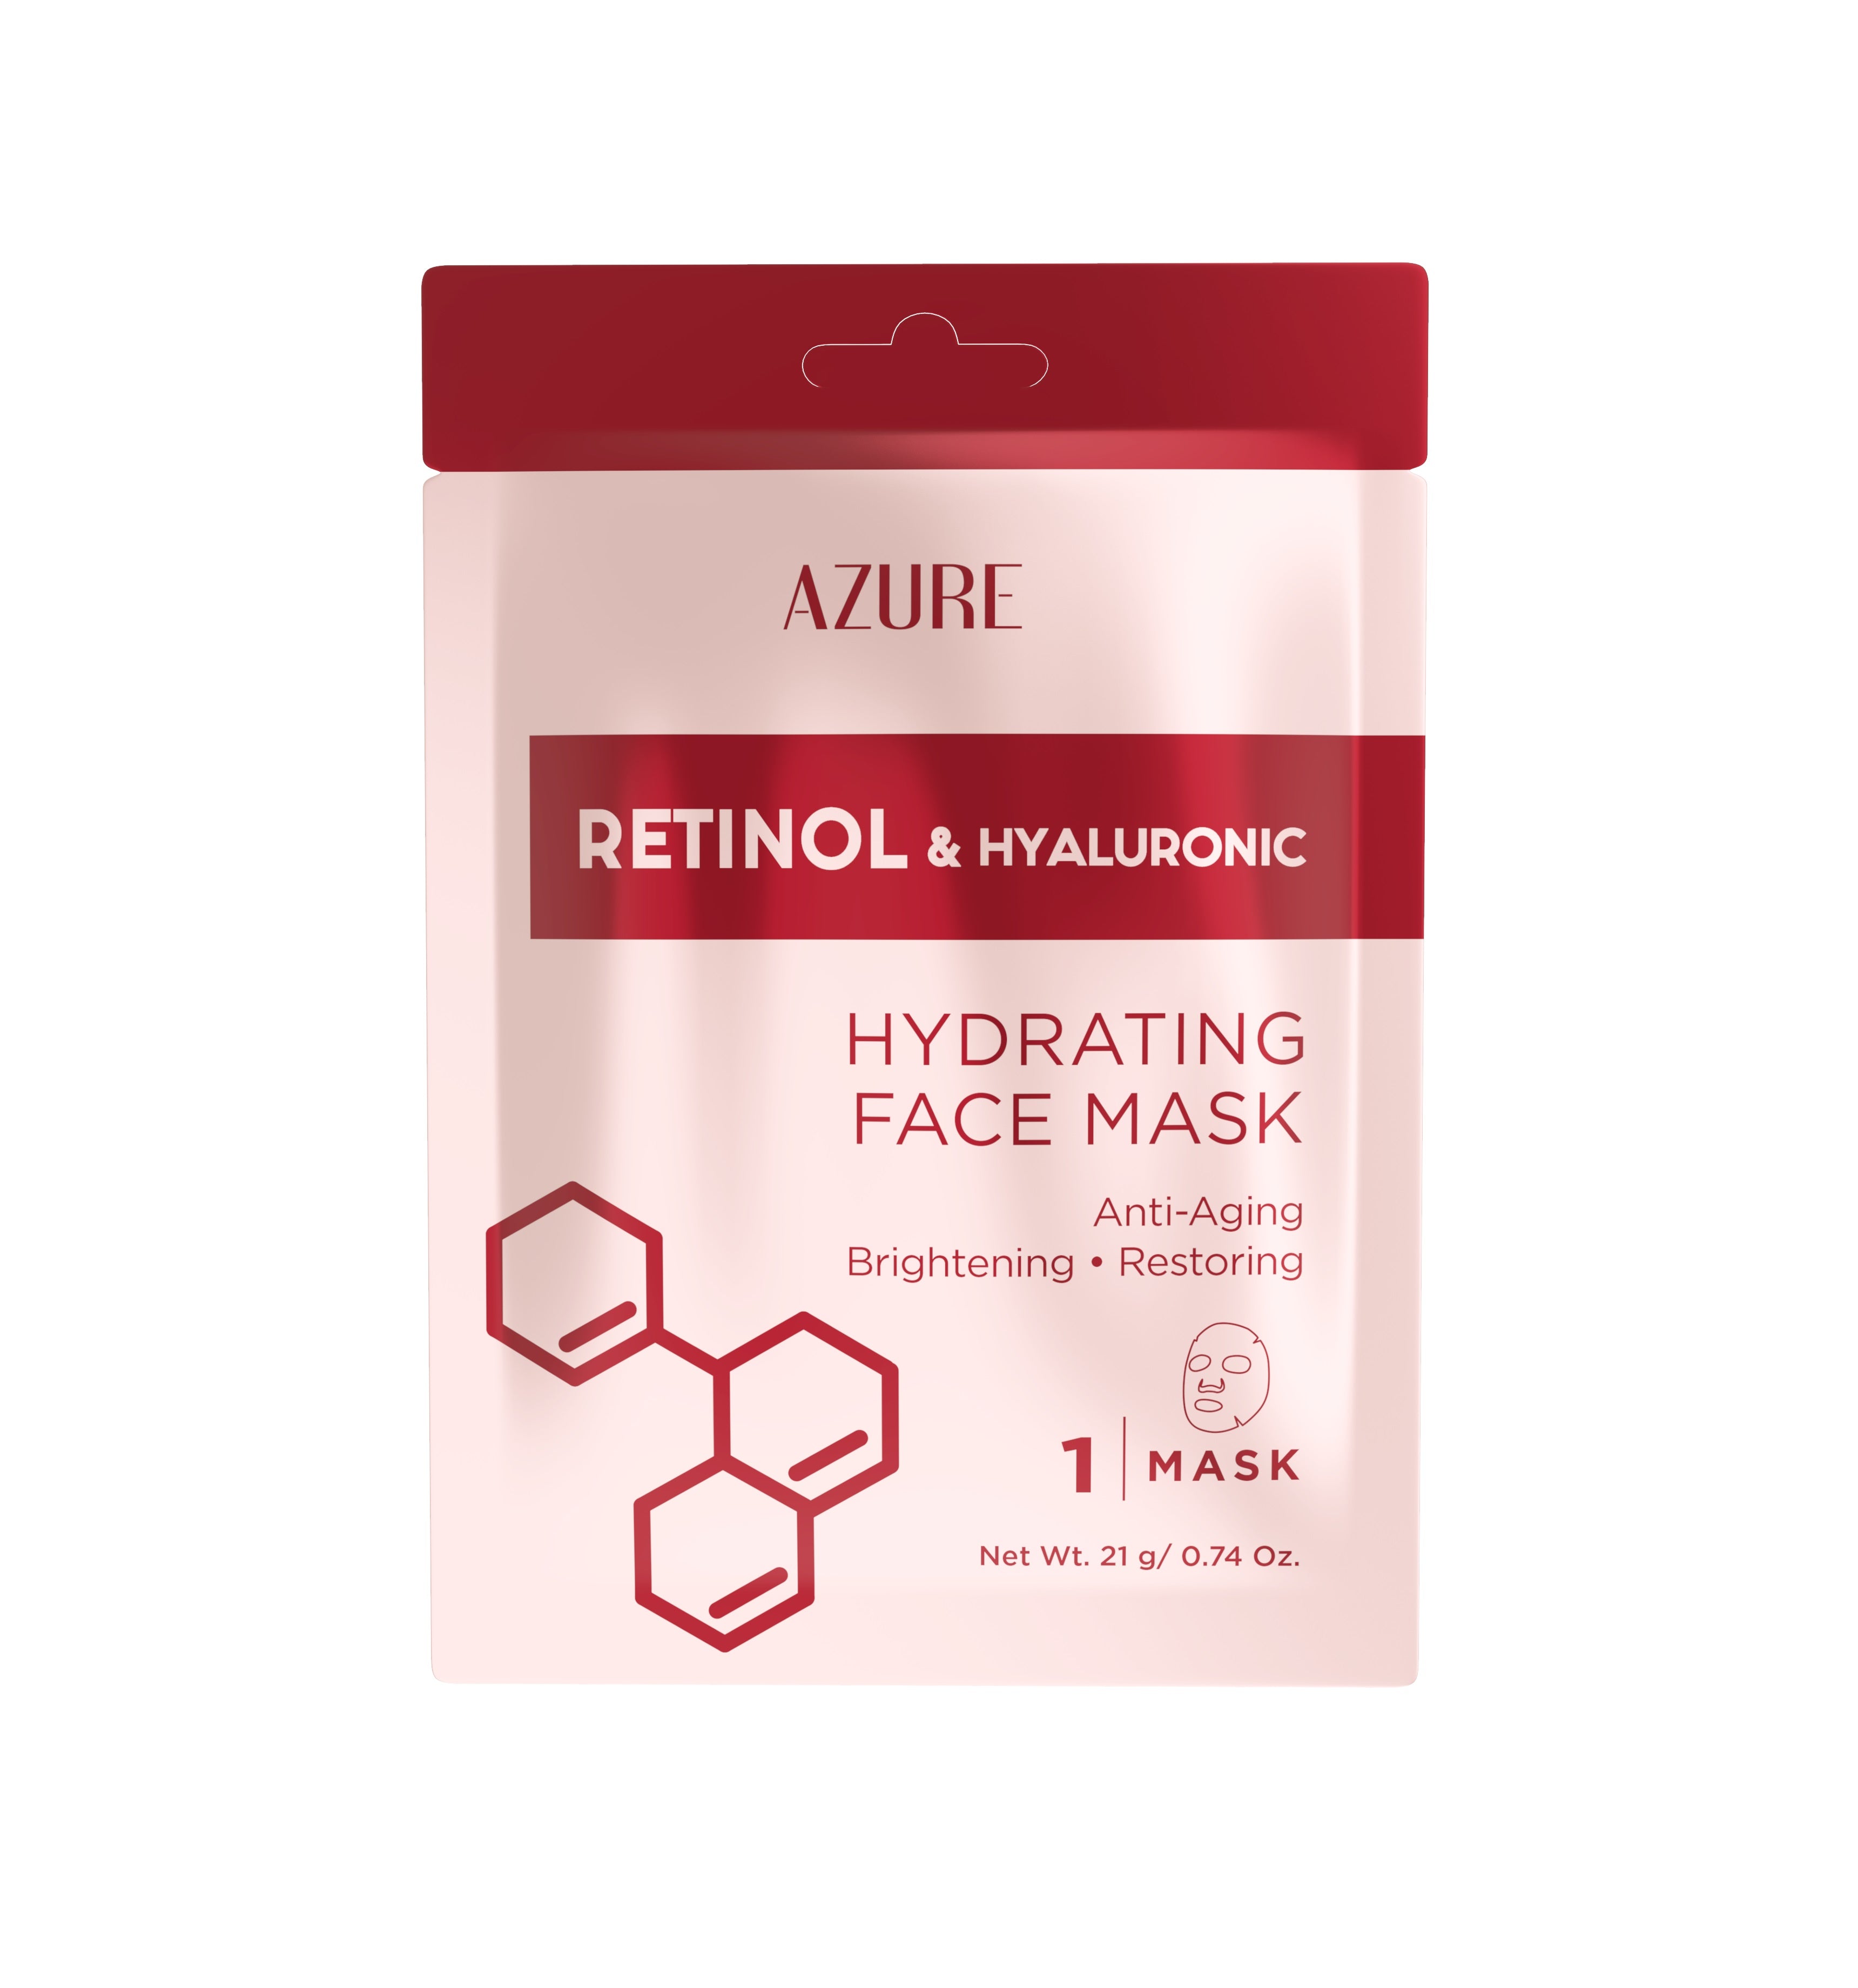 Retinol & Hyaluronic Hydrating Sheet Face Mask: 5 Pack